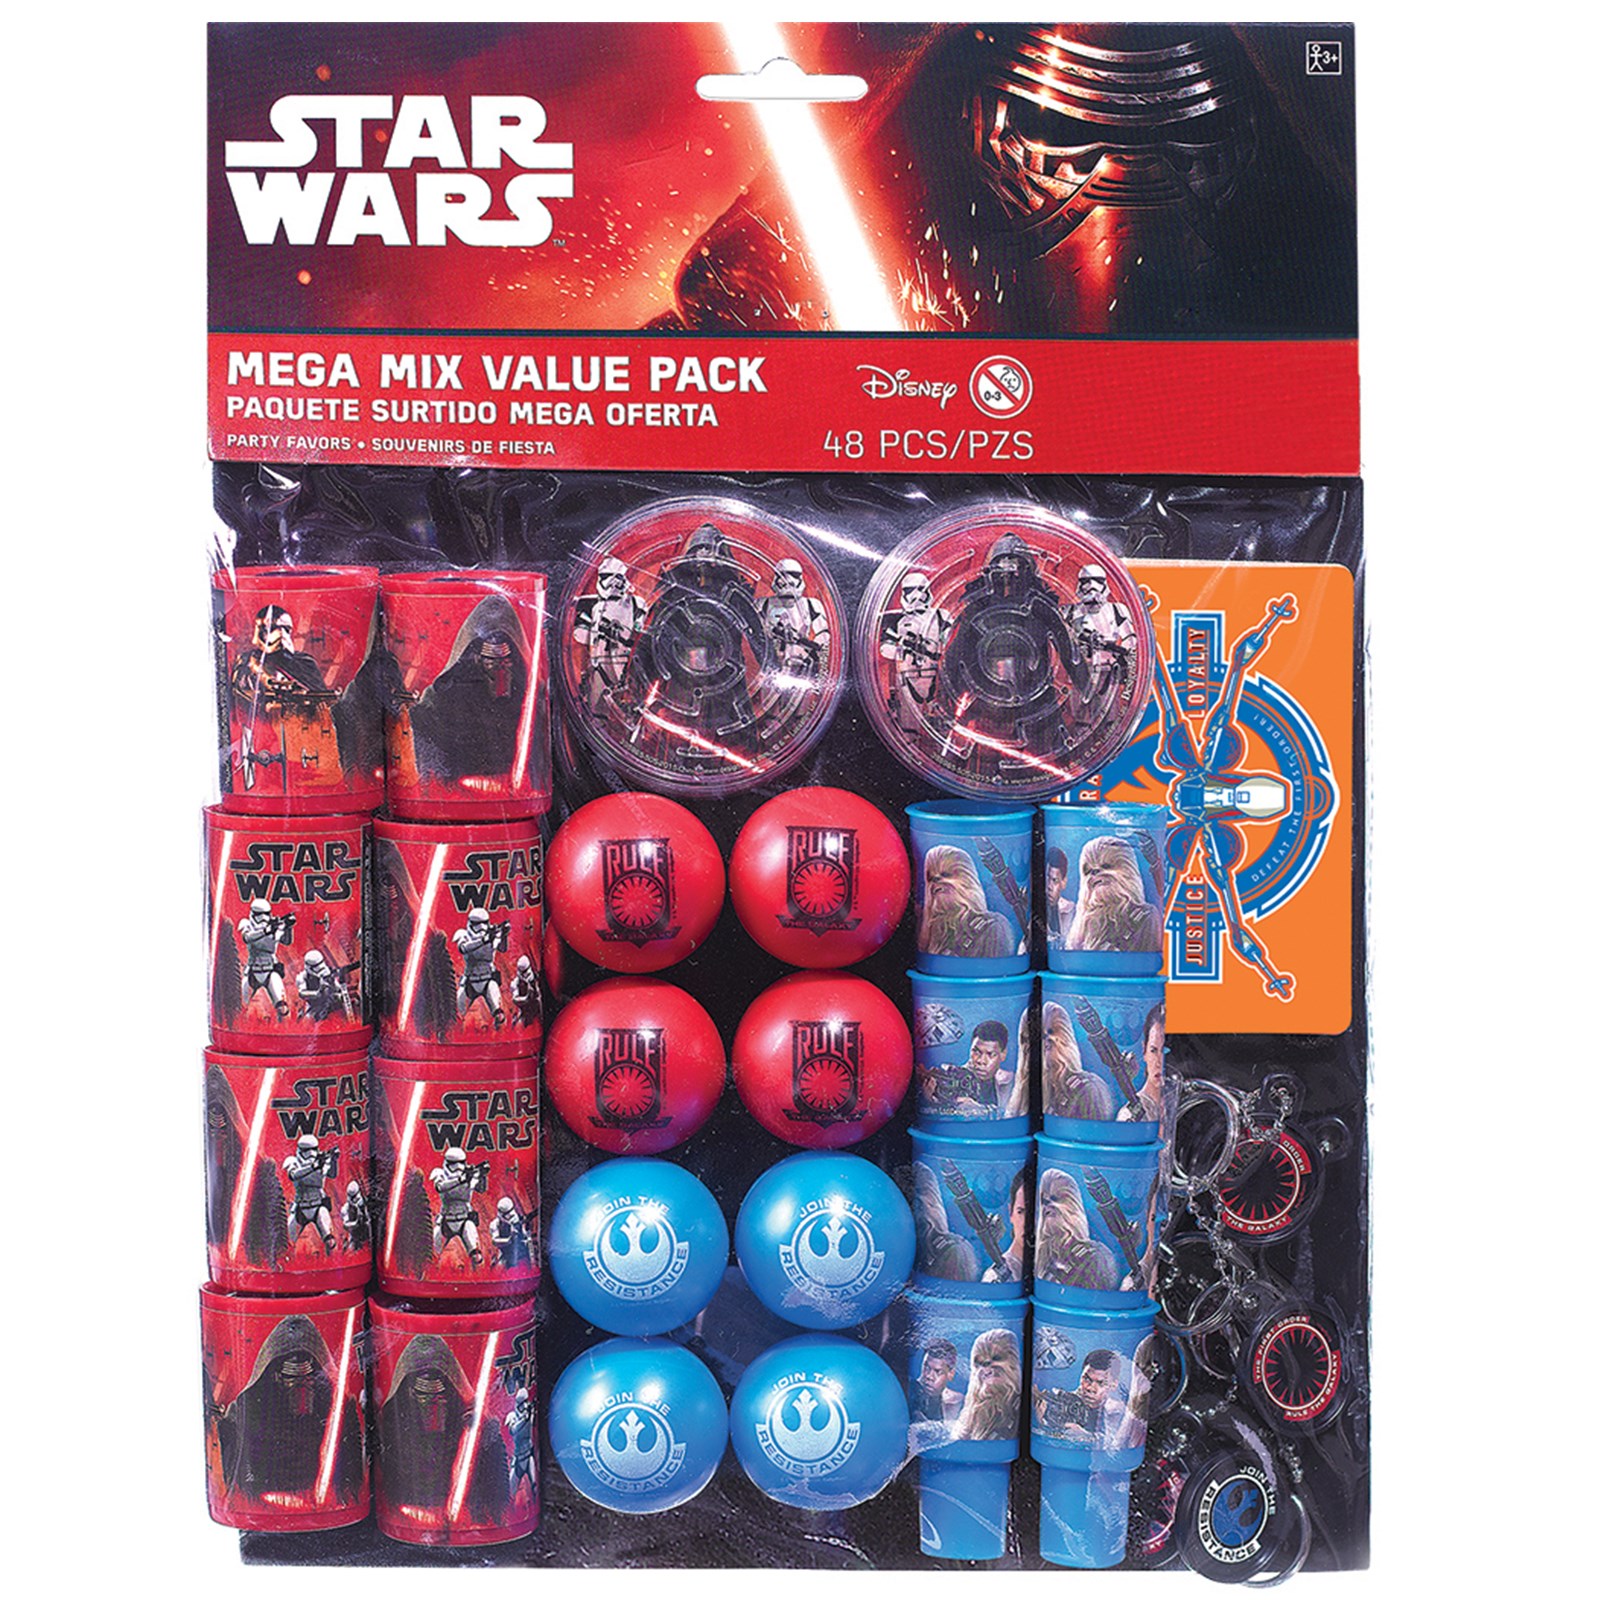 Star Wars 7 The Force Awakens Mega Mix Value Pack